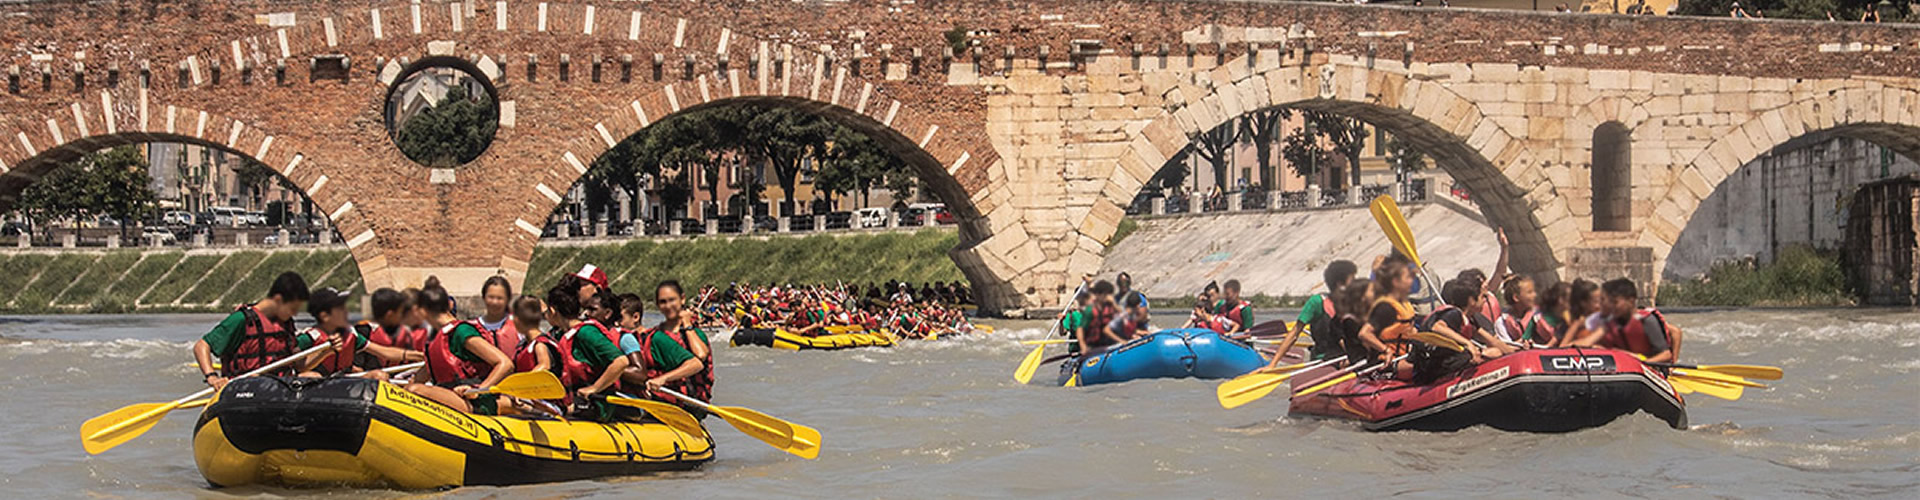 Adige Rafting Verona